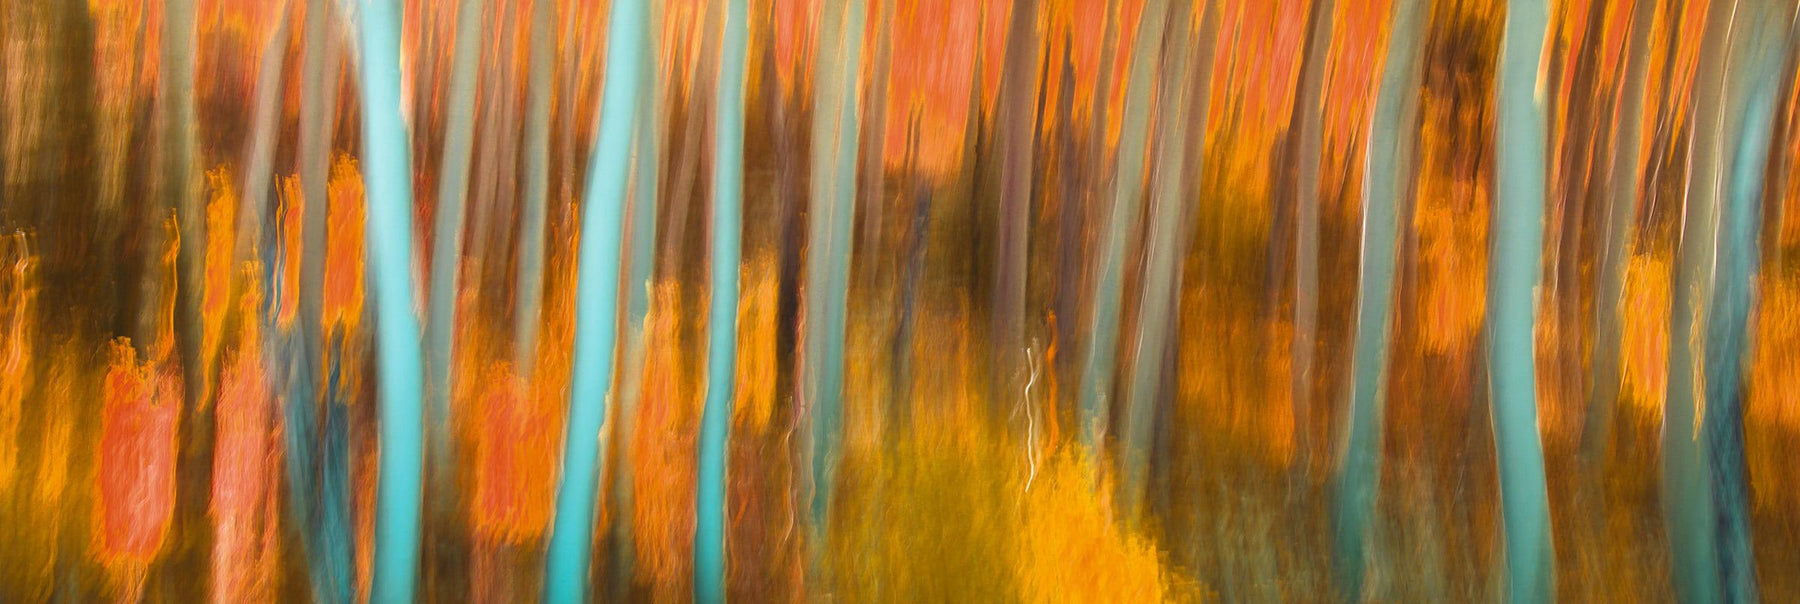 Blurred forest of orange birch trees in Colorado